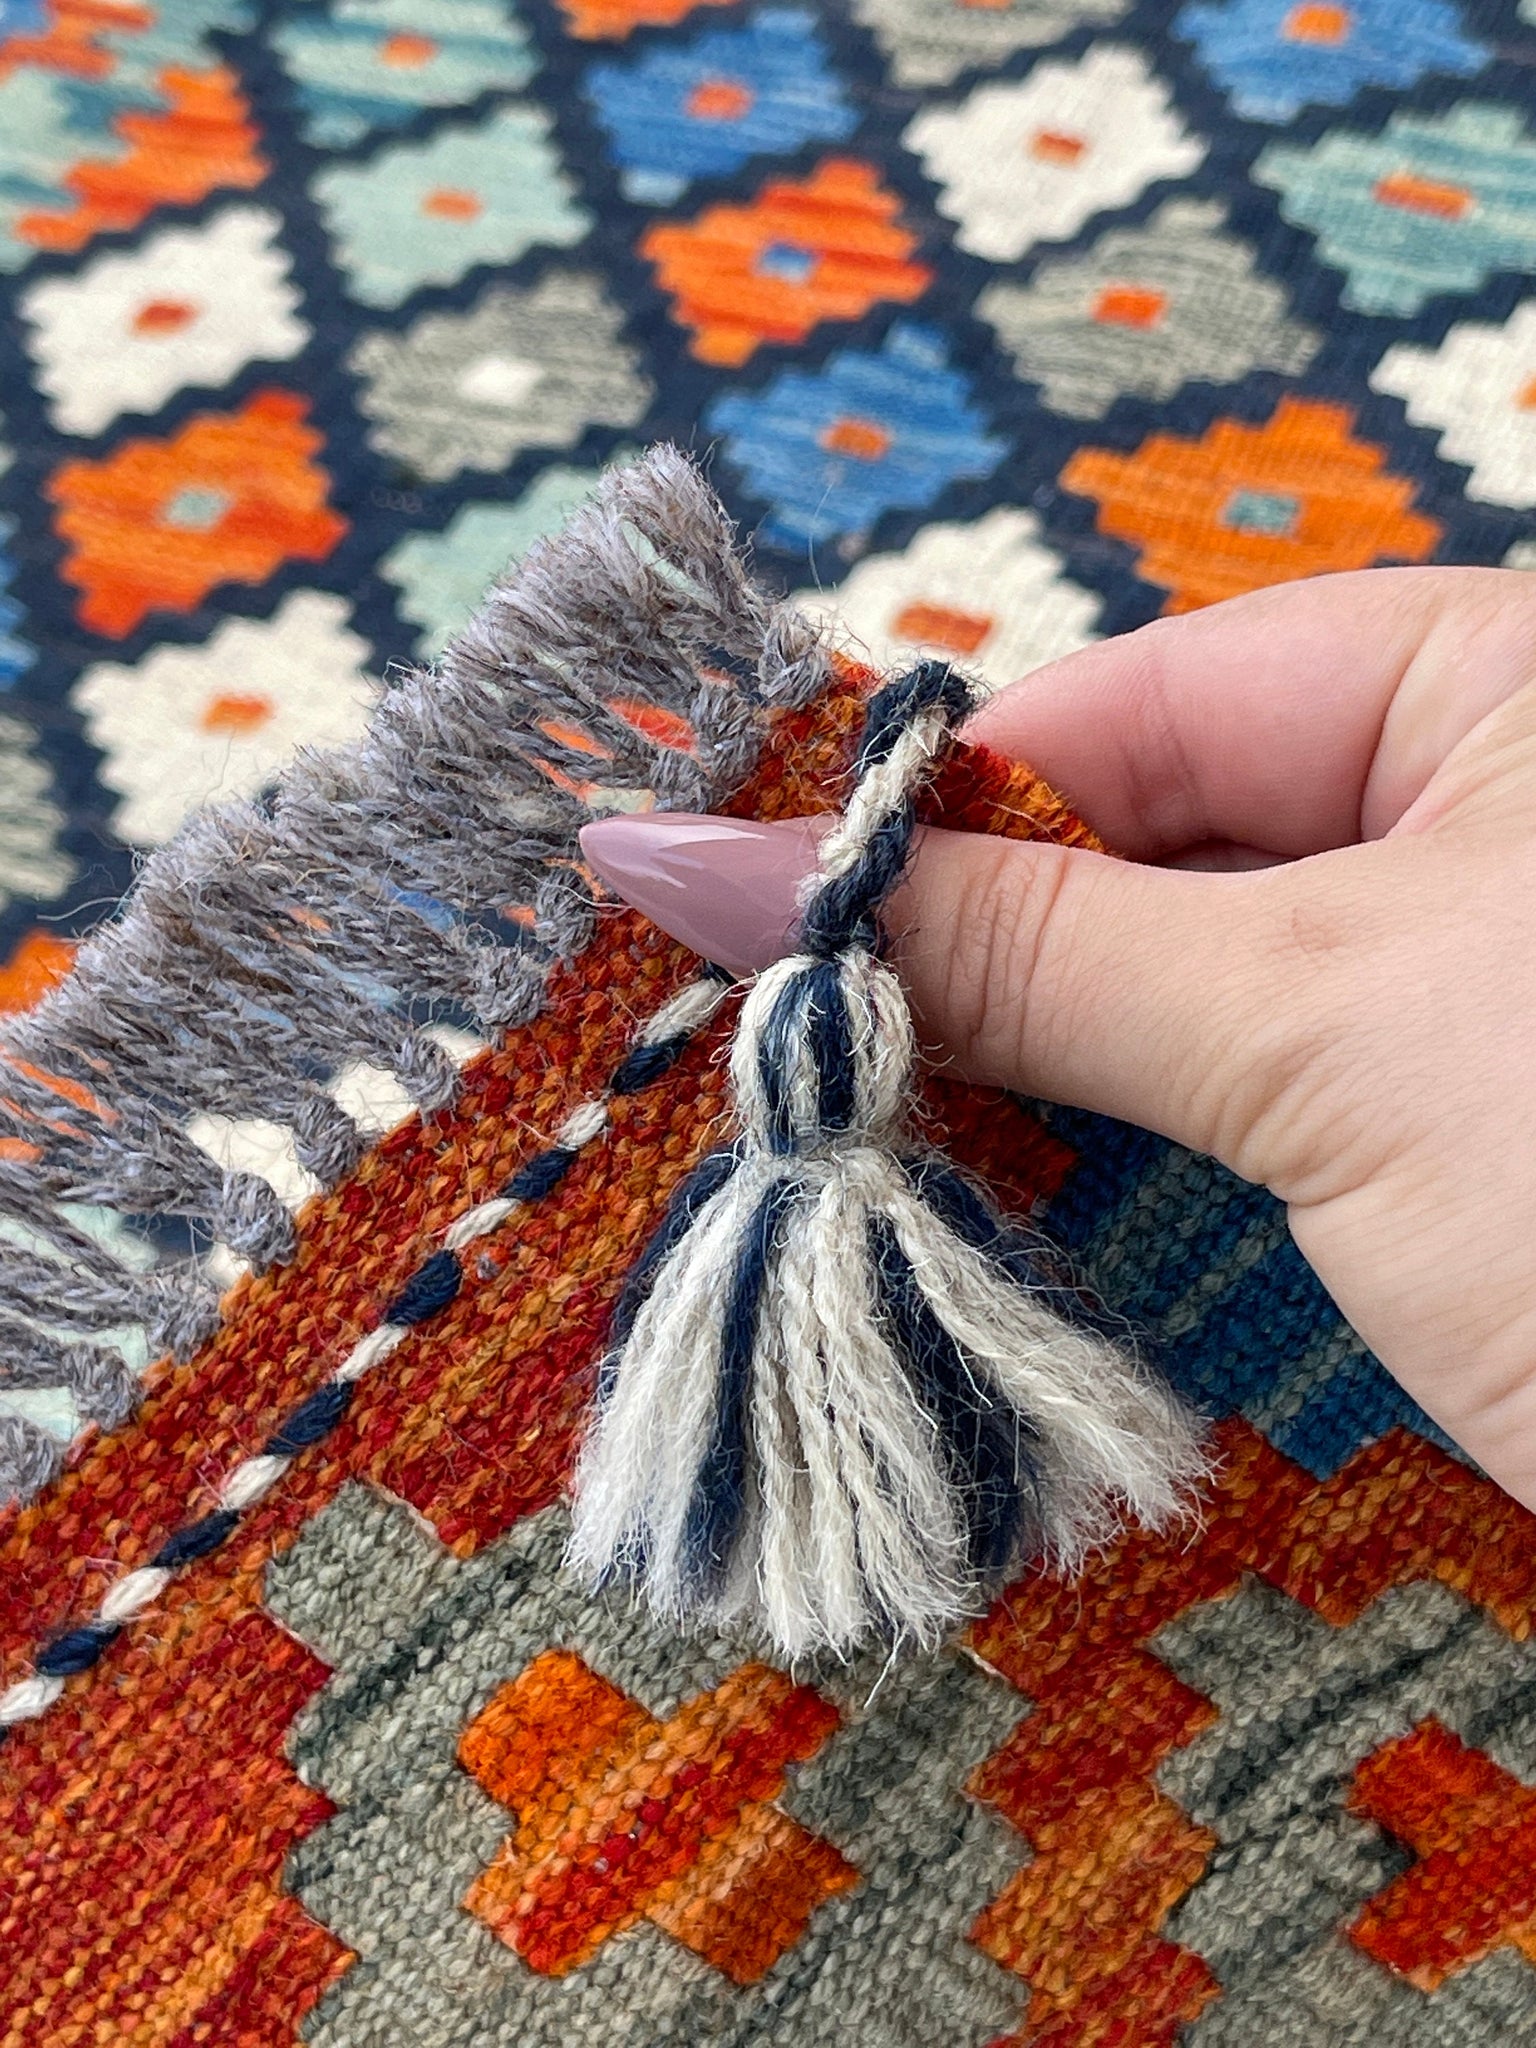 Flat Weave Turkish Kilim Rugs